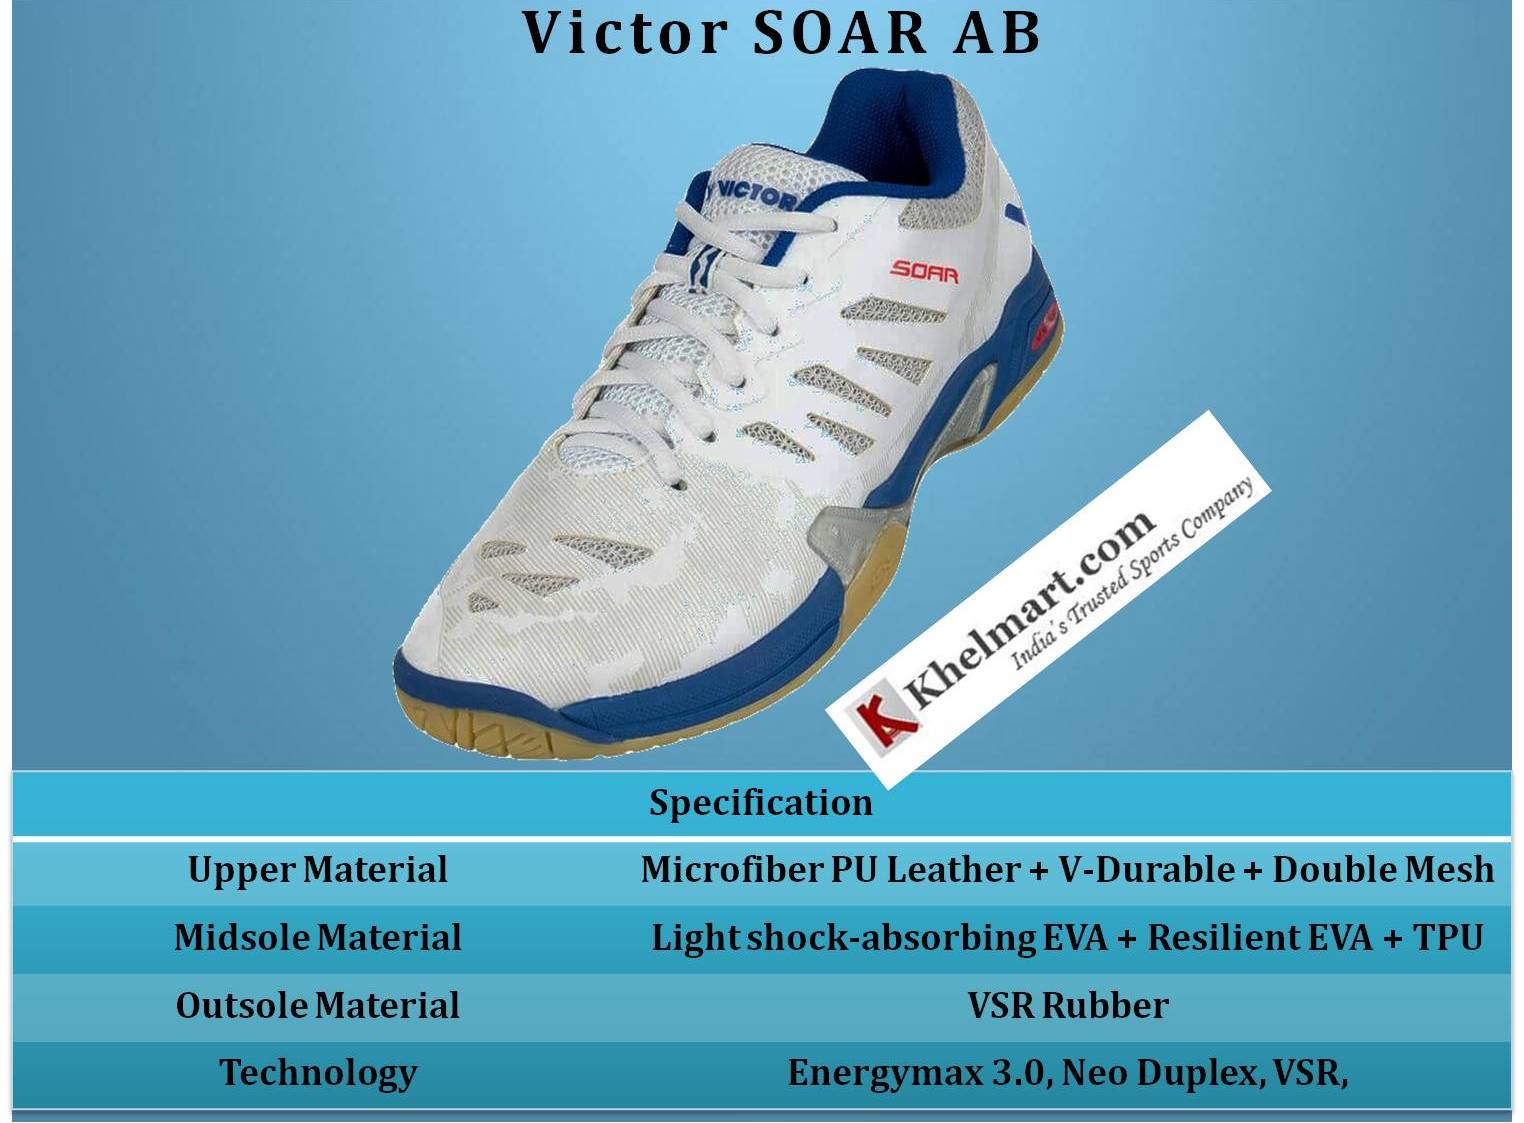 Victor_SOAR_AB_Badminton_Shoes_Specification_Khelmart